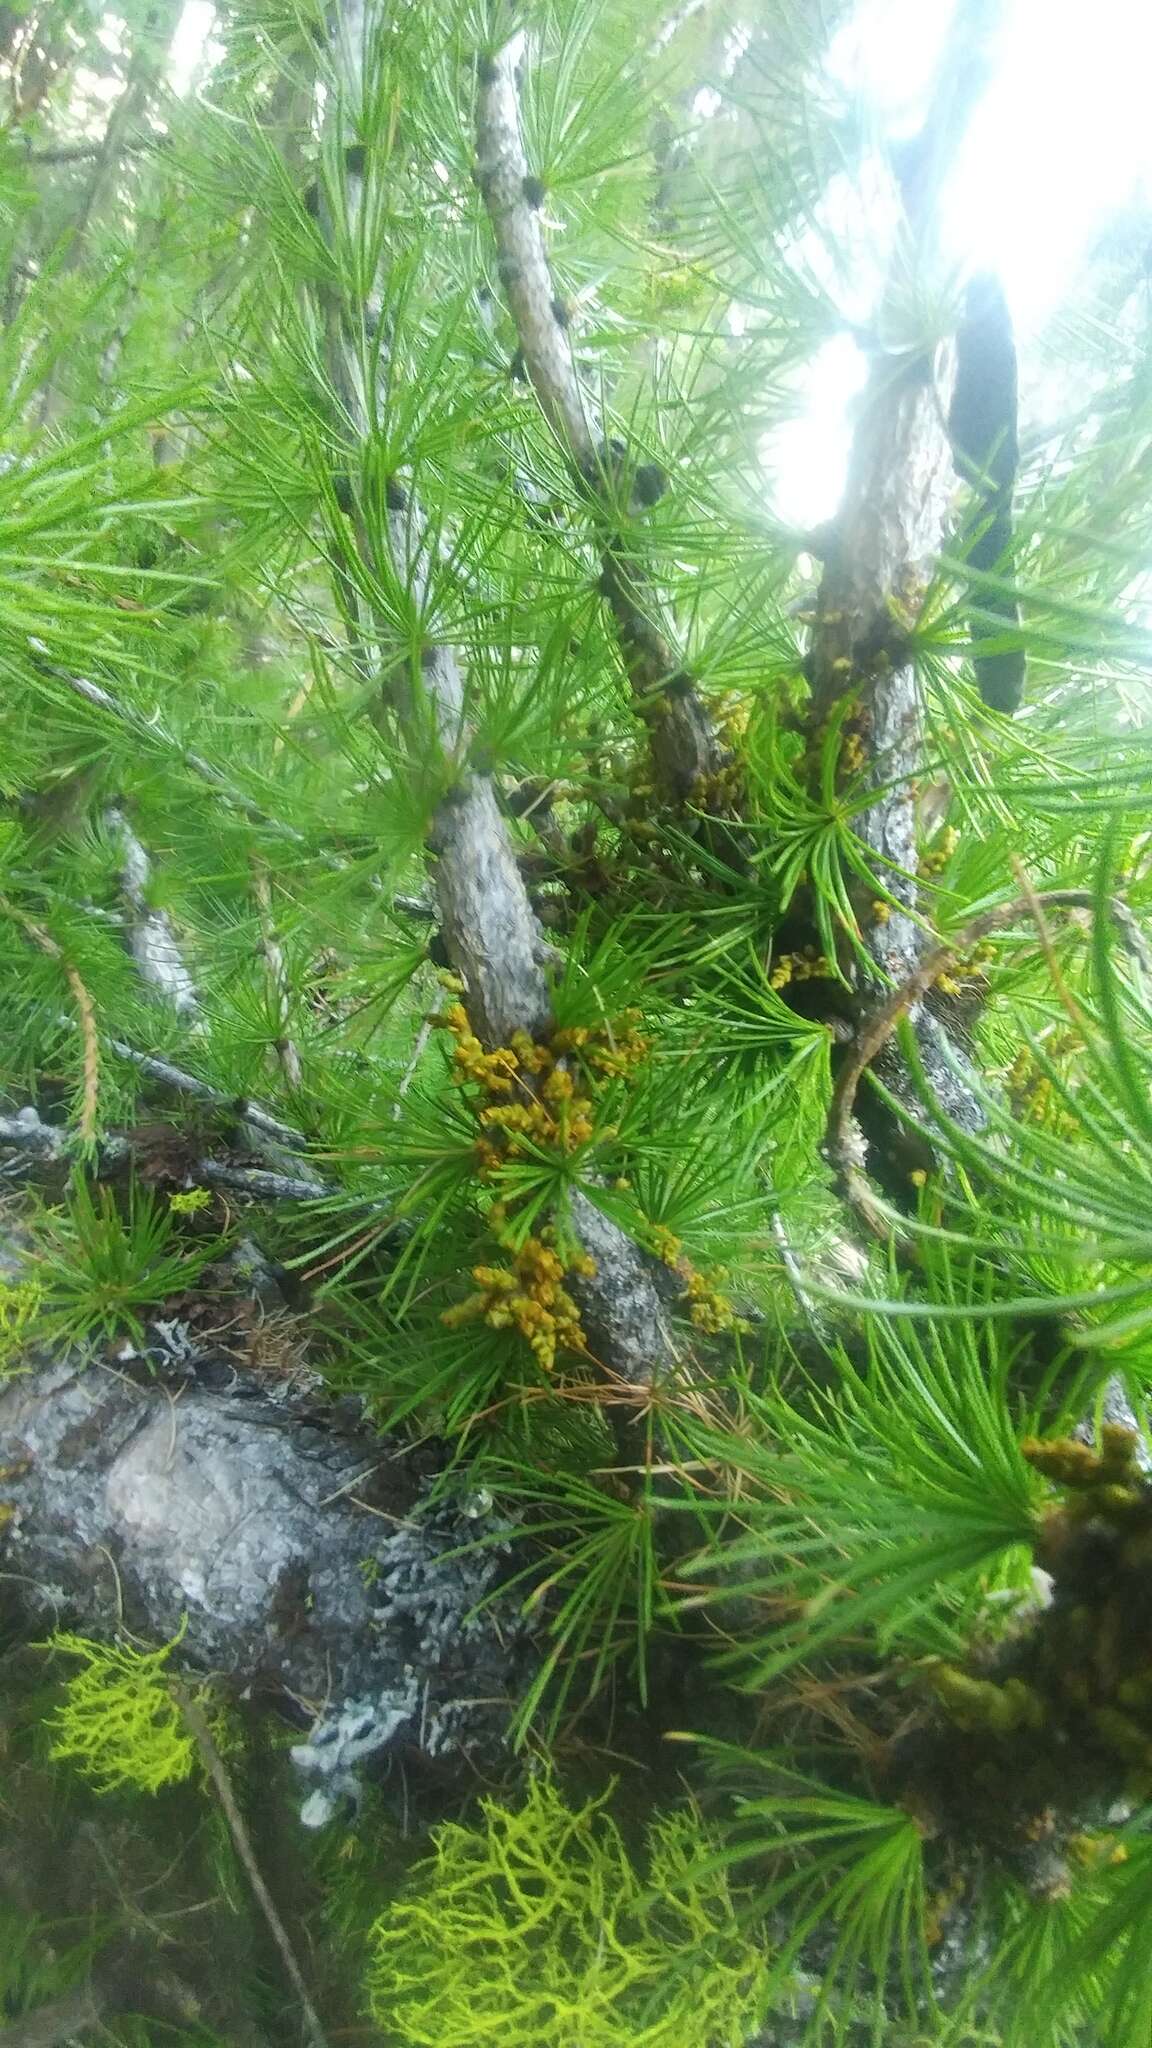 Image of larch dwarf mistletoe